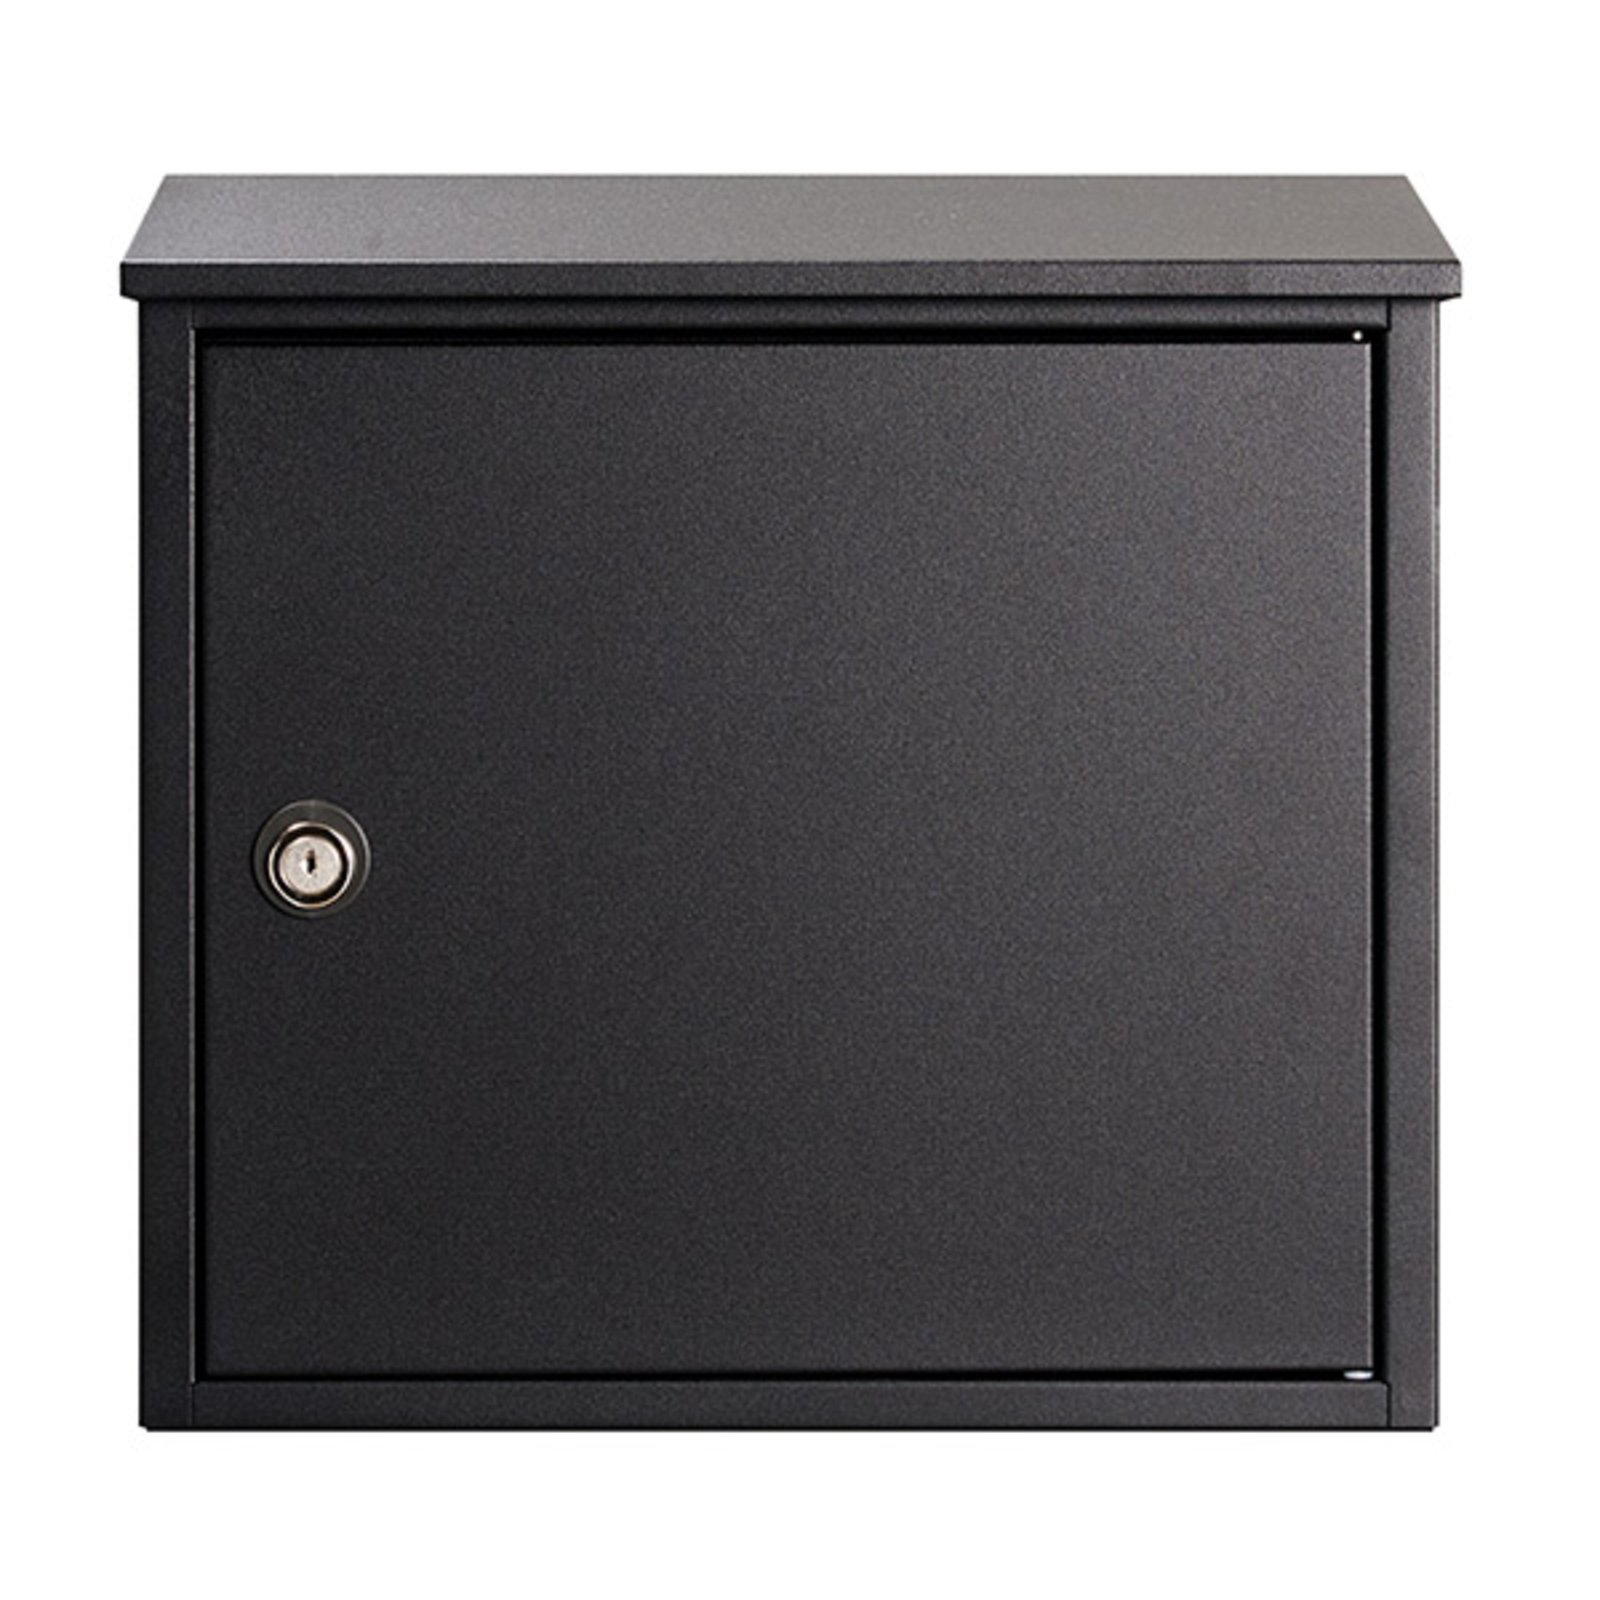 Allux 400S wall letterbox, black